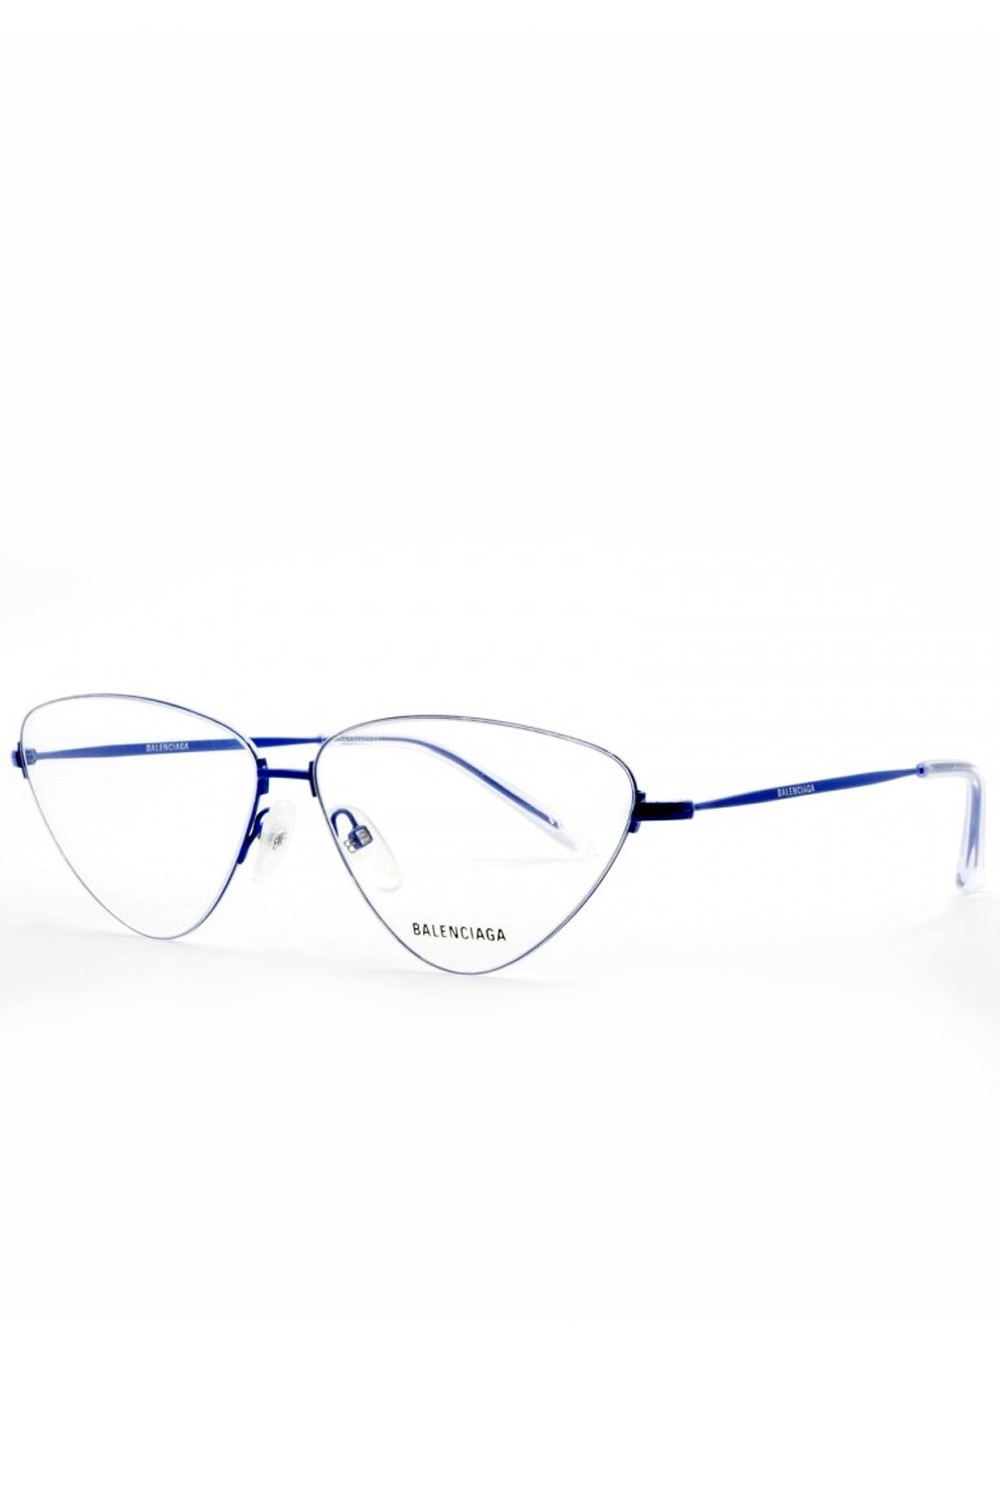 Balenciaga - Occhiali da vista in metallo cat eye per donna blu - BB0015B 004